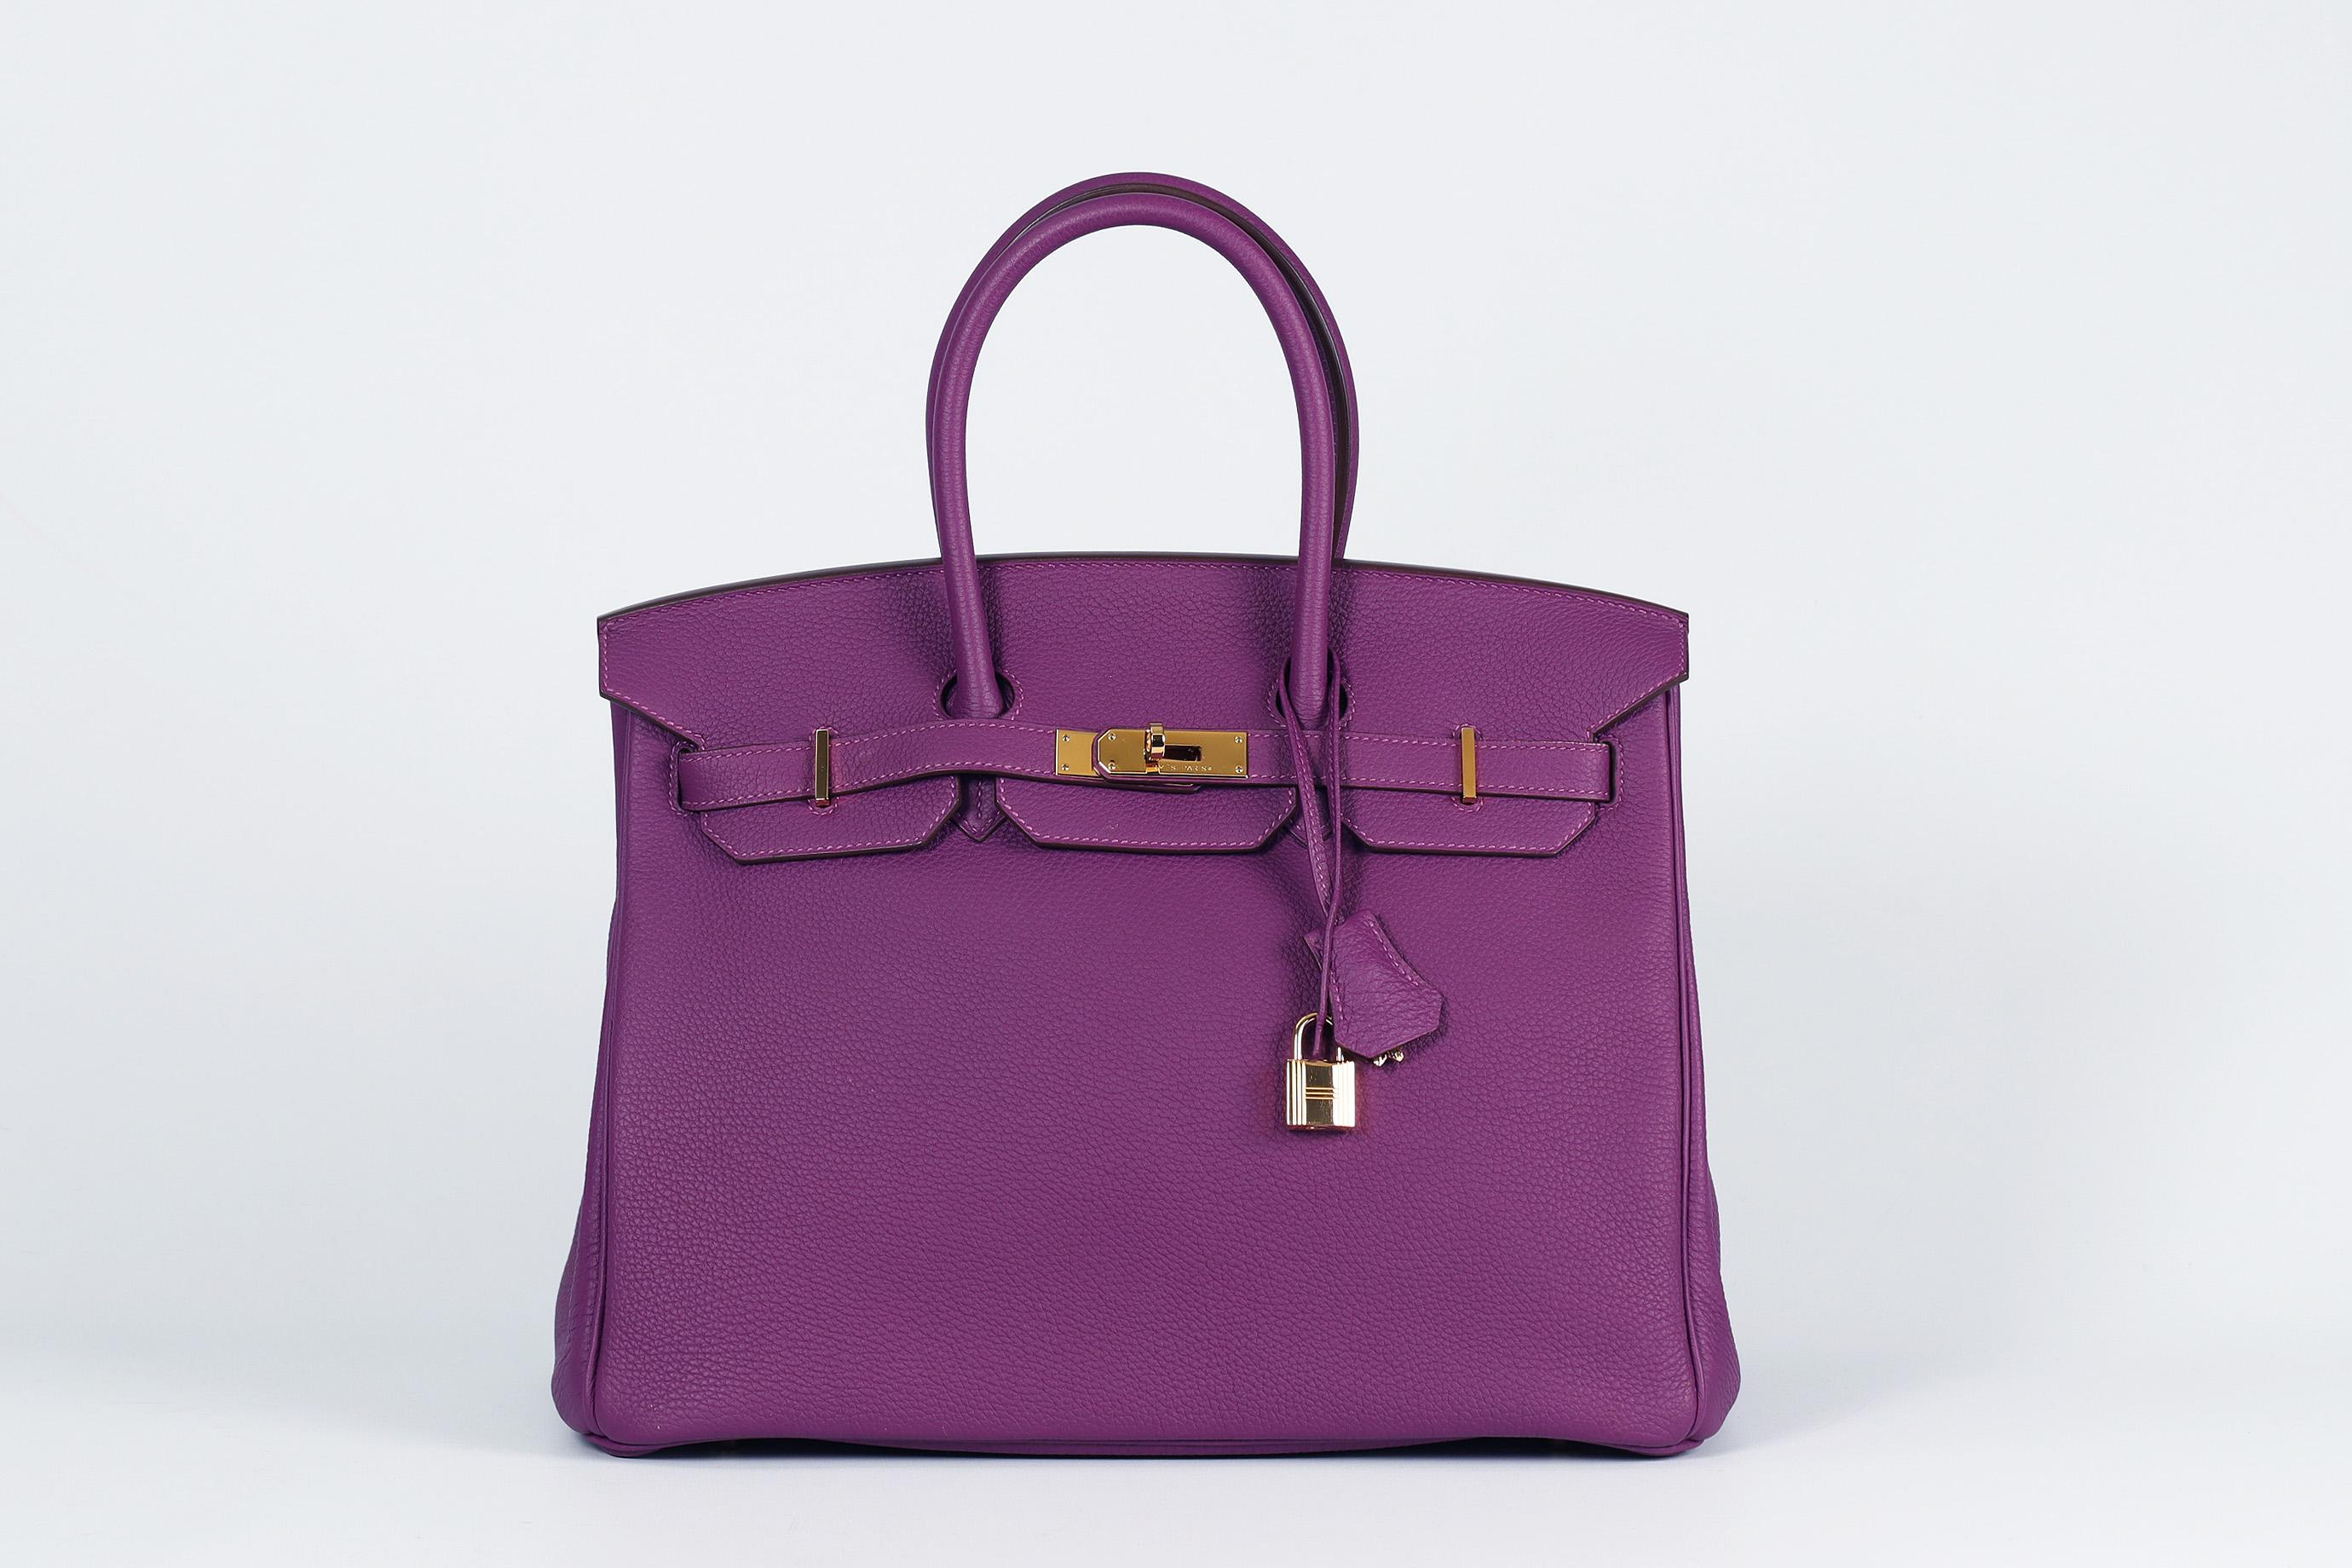 <ul>
<li>Hermès 2014 Birkin 35Cm Togo Leather Bag.</li>
<li>Purple.</li>
<li>Made in France, this beautiful 2014 Hermès ‘Birkin’ handbag has been made from purple ‘Togo’ leather exterior in ‘Anemone’ with matching leather interior, this piece is